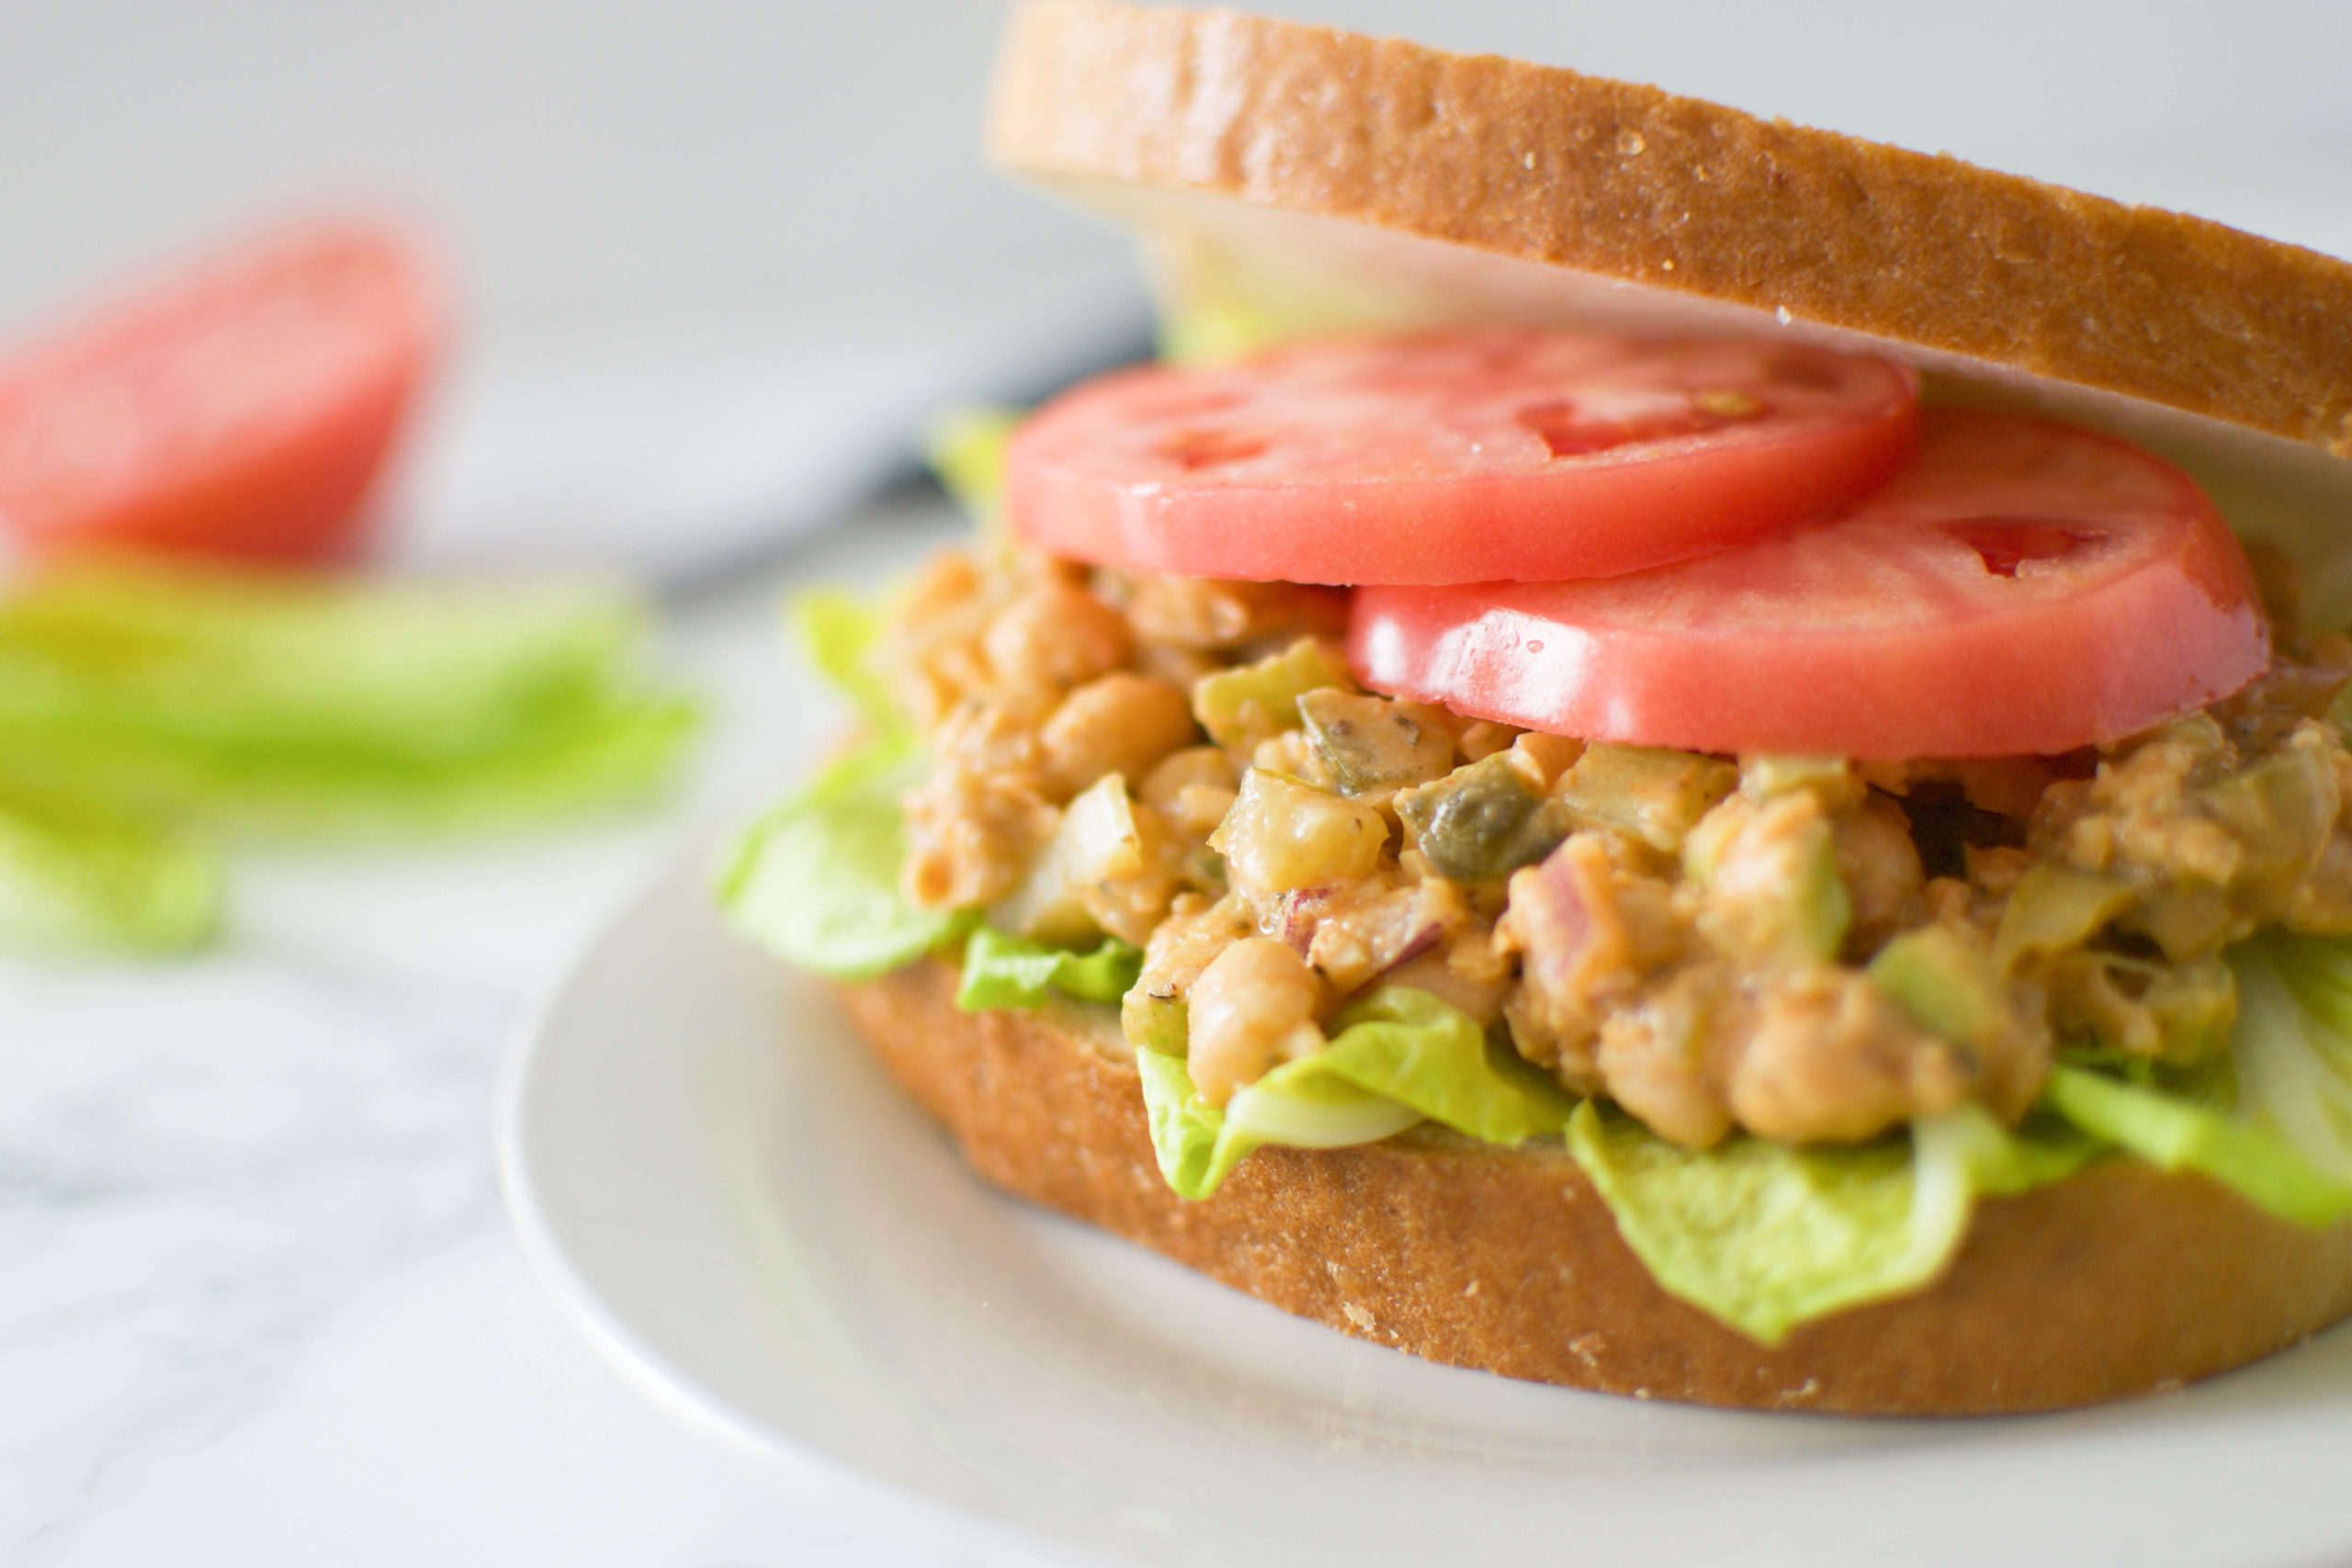 Chickpea Tuna-Less Sandwich